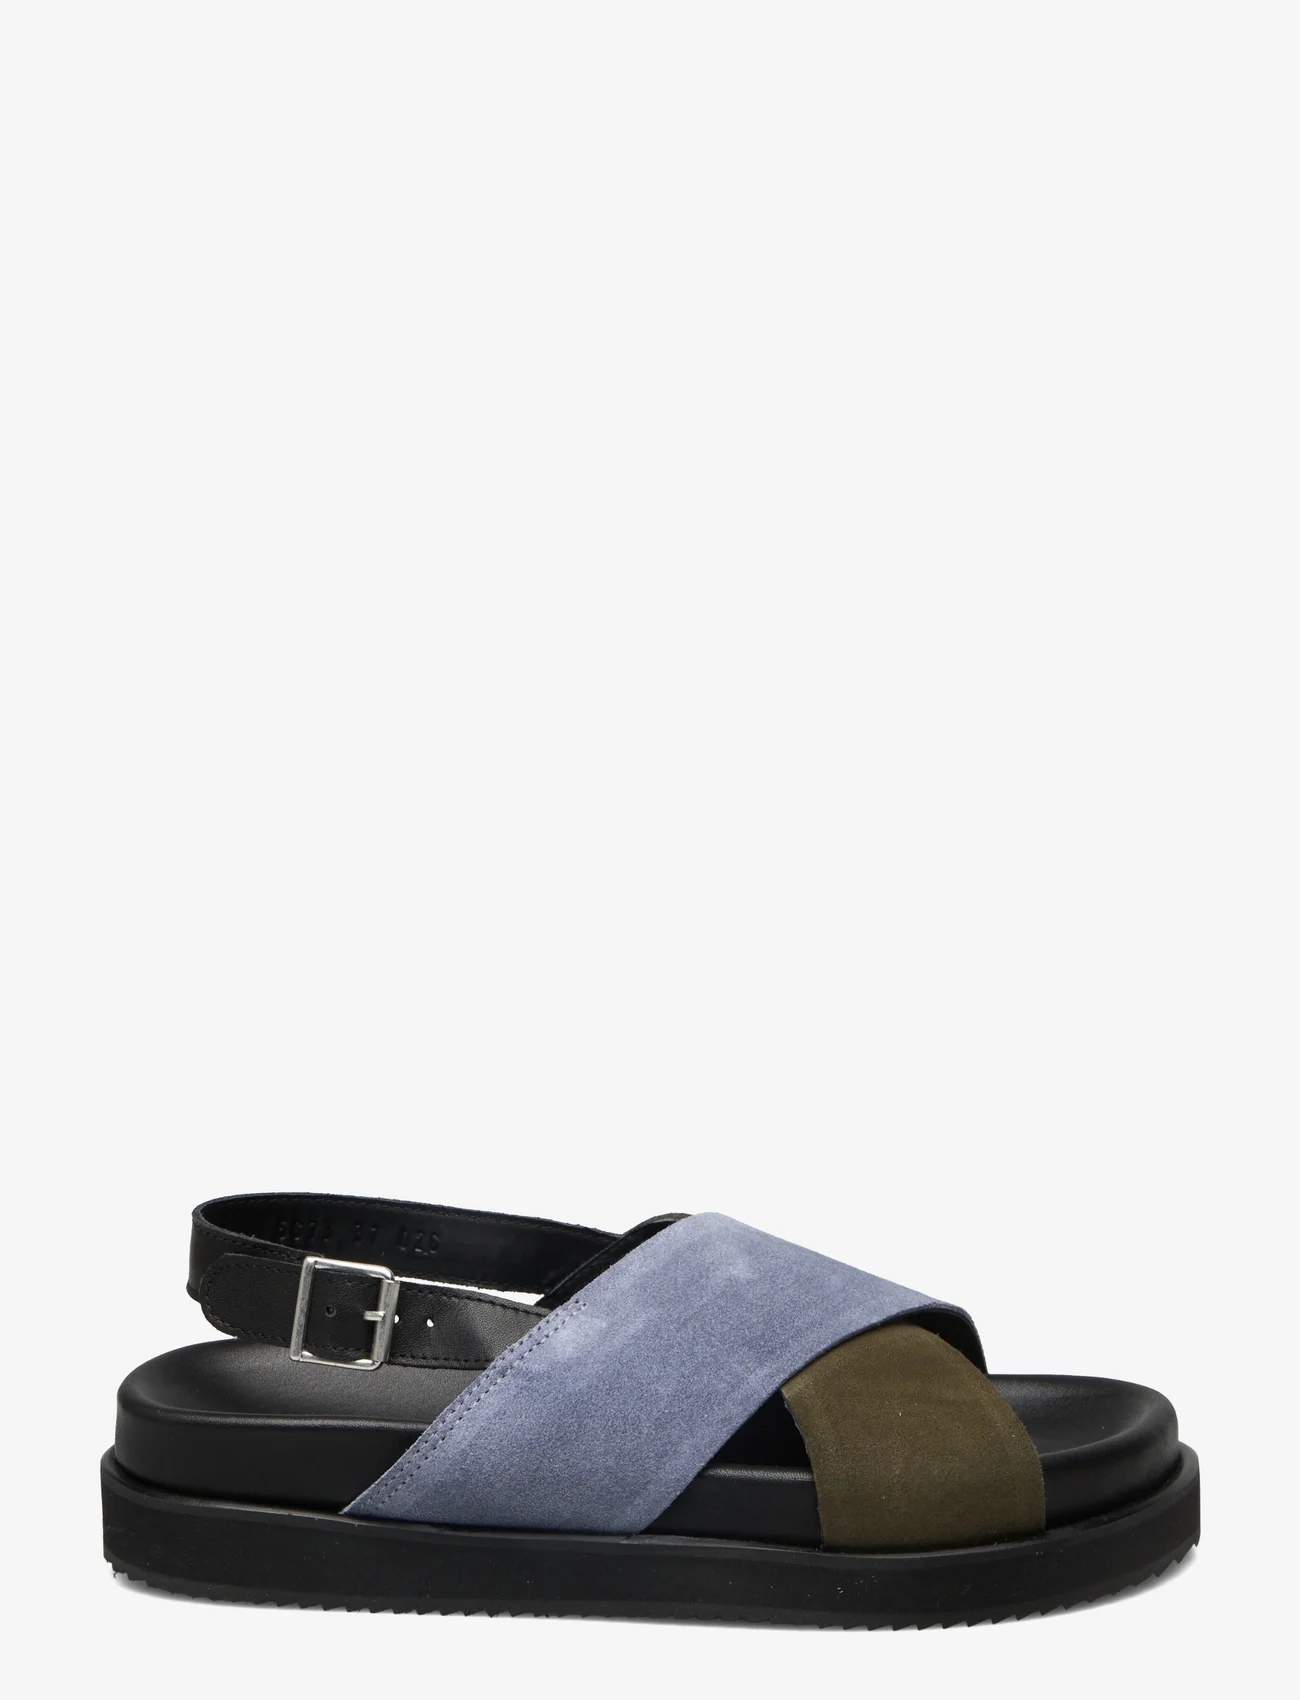 ANGULUS - Sandals - flat - open toe - op - platte sandalen - 1604/2244/2242 black/green/lig - 1